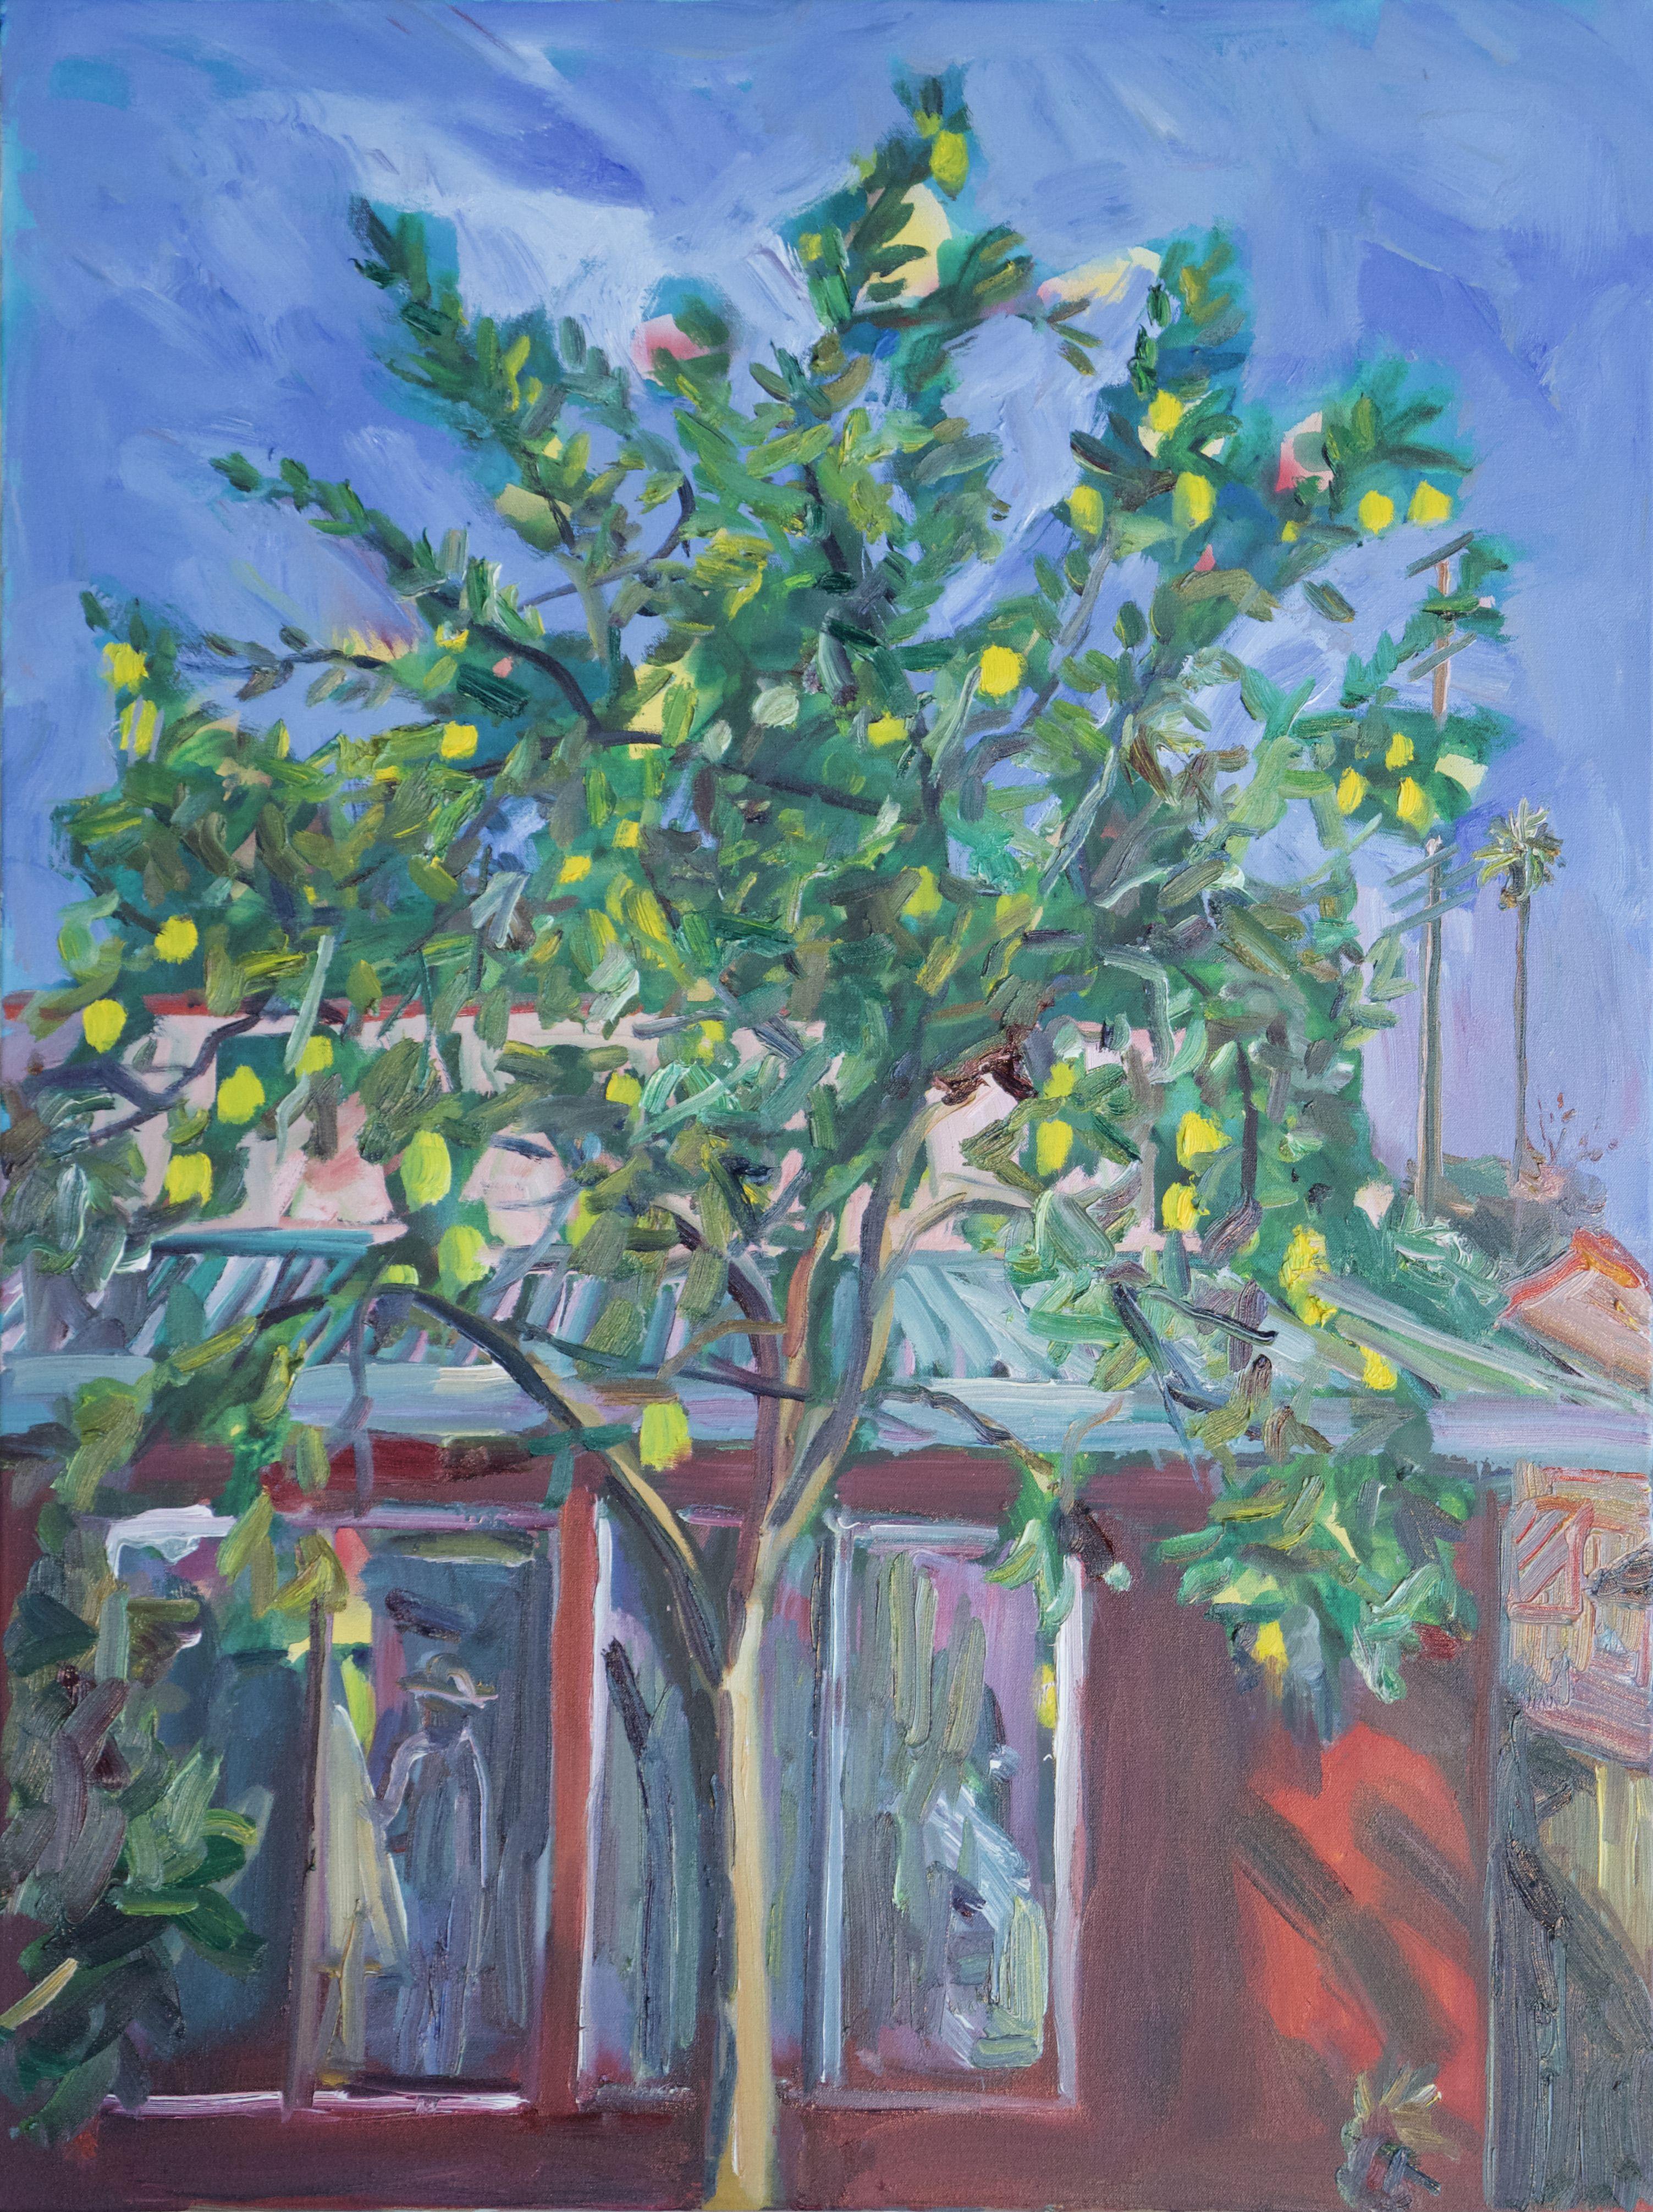 John Kilduff Landscape Painting - Lemon tree in the backyard, Painting, Oil on Canvas